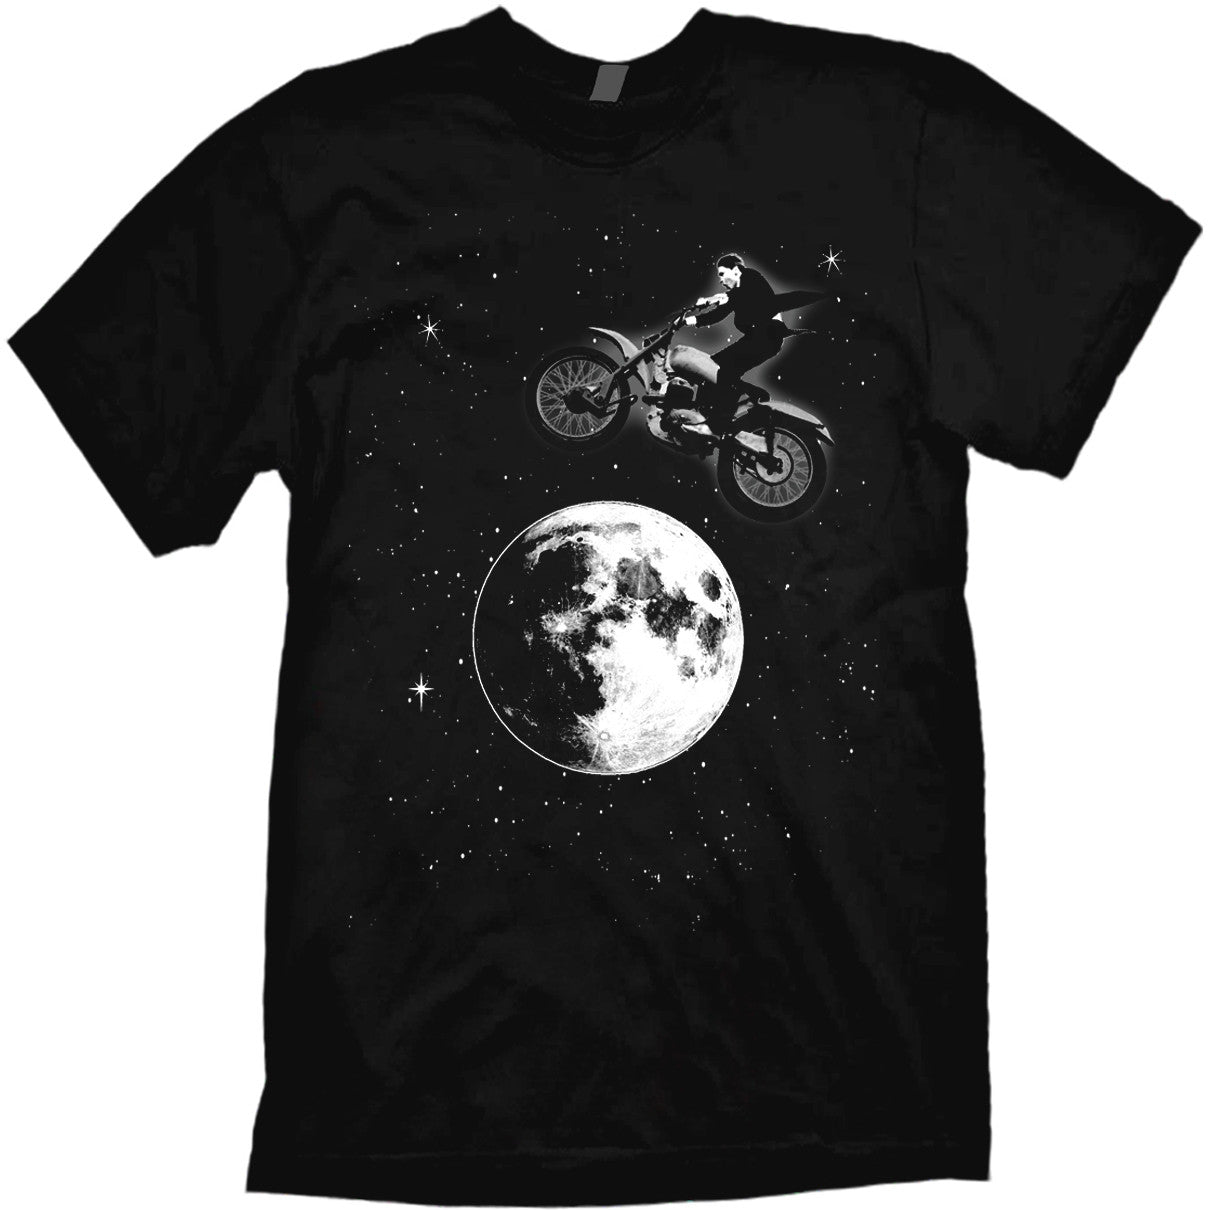 Graphic T-shirt "Moon Jumper"